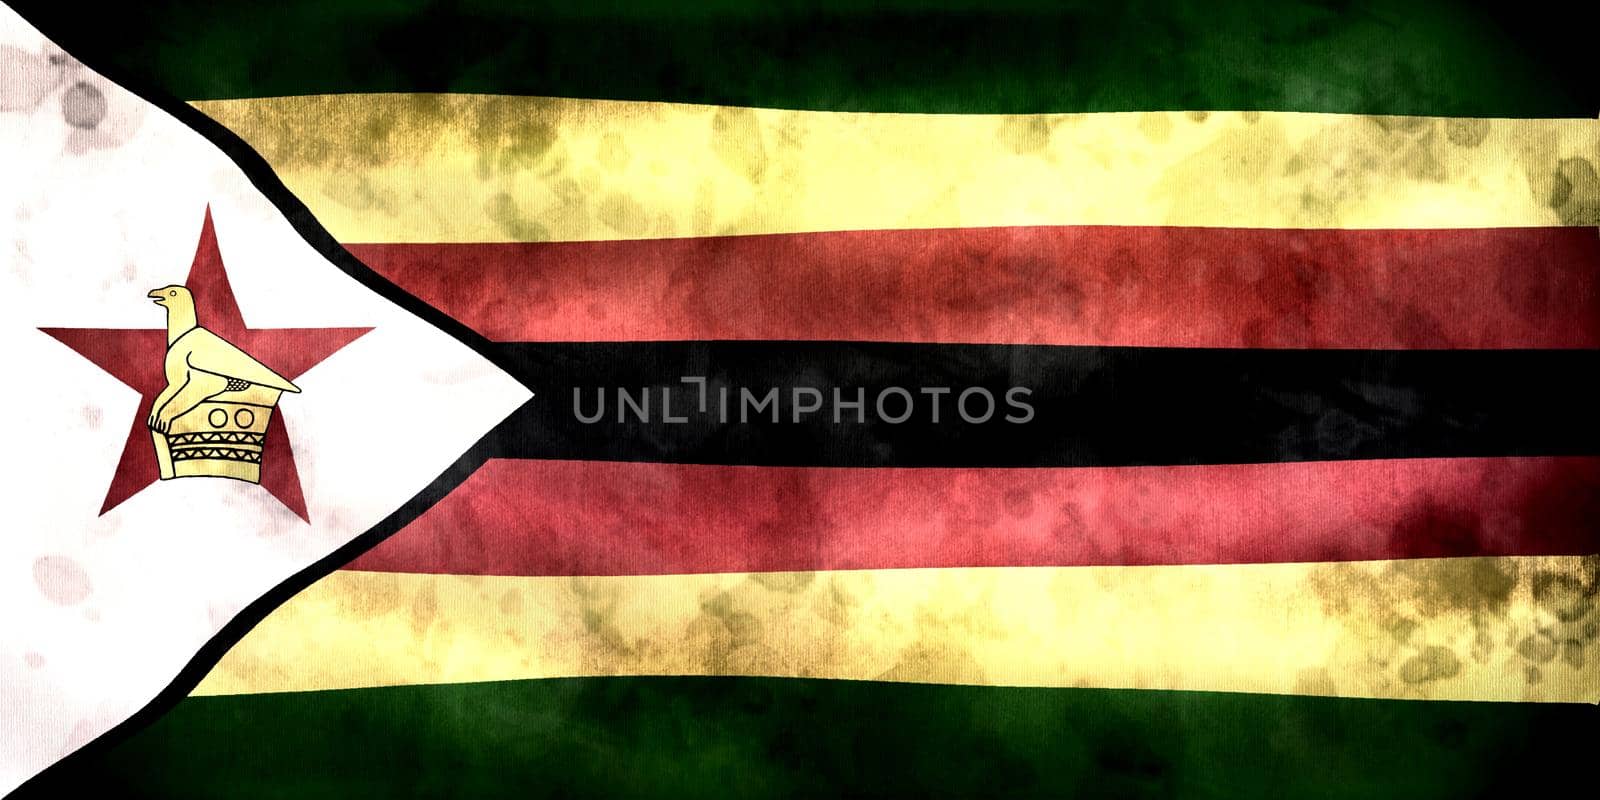 3D-Illustration of a Zimbabwe flag - realistic waving fabric flag.